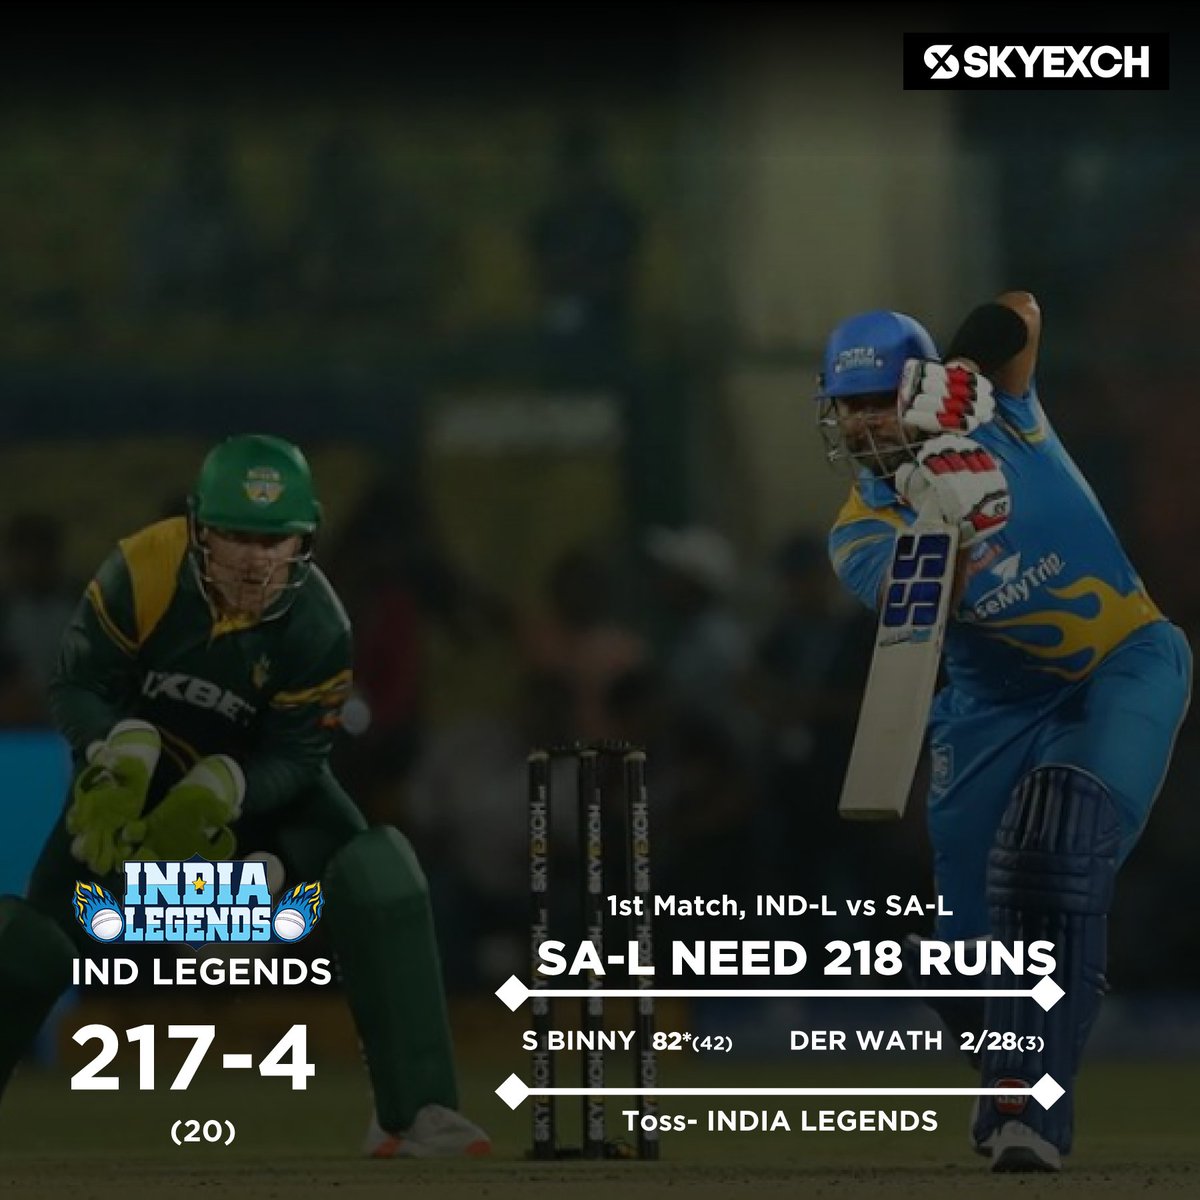 India post a huge score of 217 run in first match against South Africa in Road Safety World Series 2022. 

#LegendsLeagueCricket #BhilwaraGroup #SkyExchCricket #SkyExchSport #T20Cricket #SachinTendulkar #SouthAfricaLegends #IndiaLegends #skyexch #RoadSafetyWorldSeries